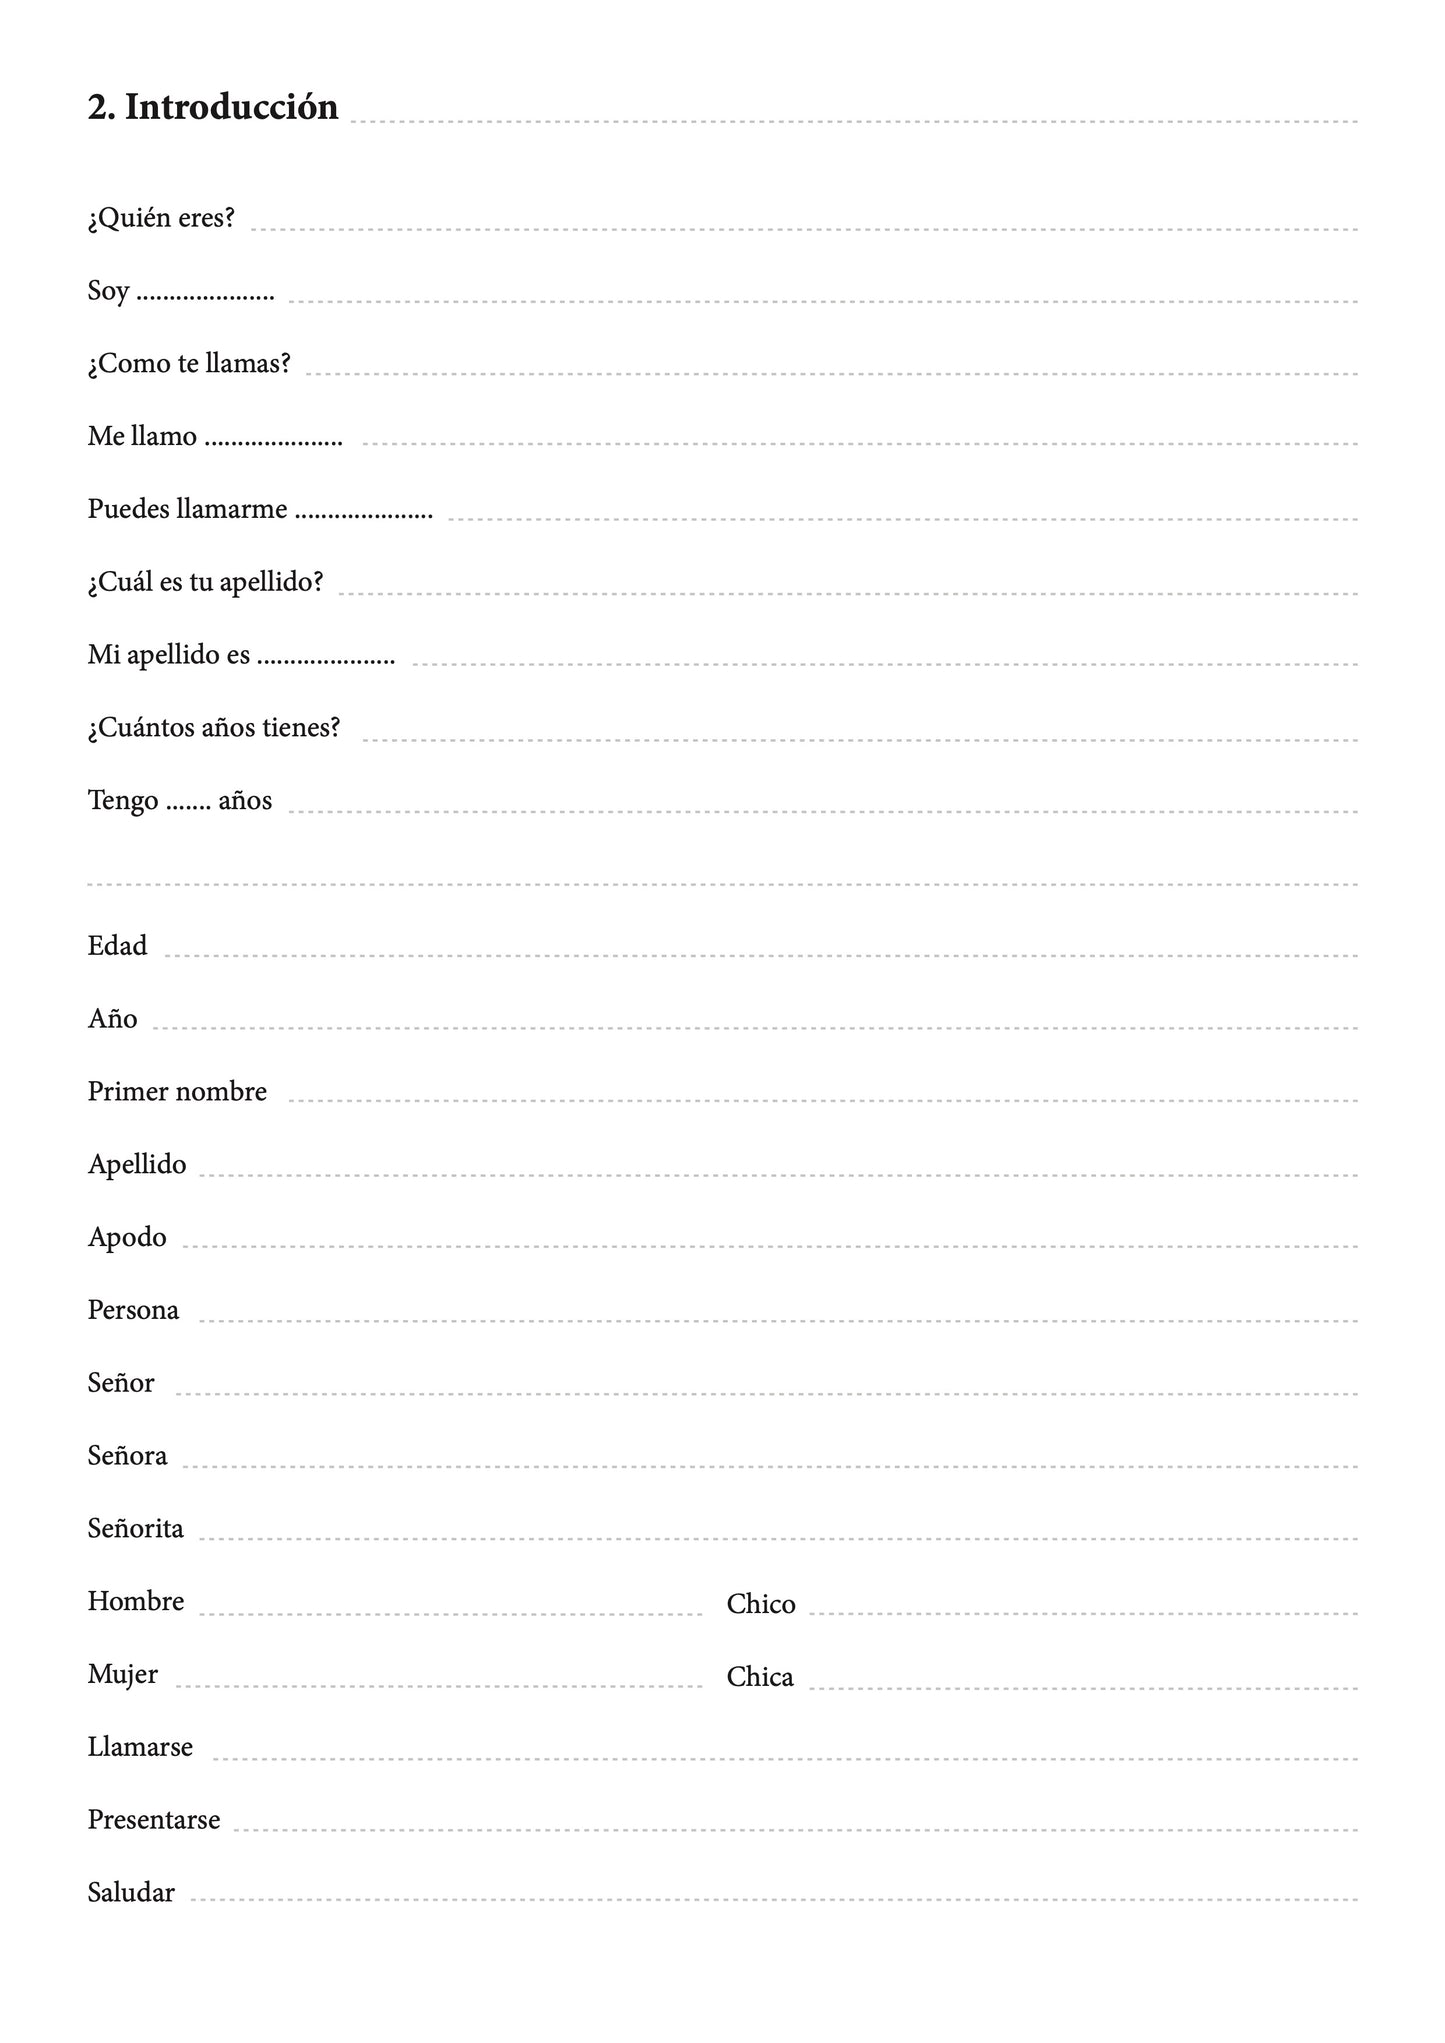 Español-suajili cuaderno de vocabulario